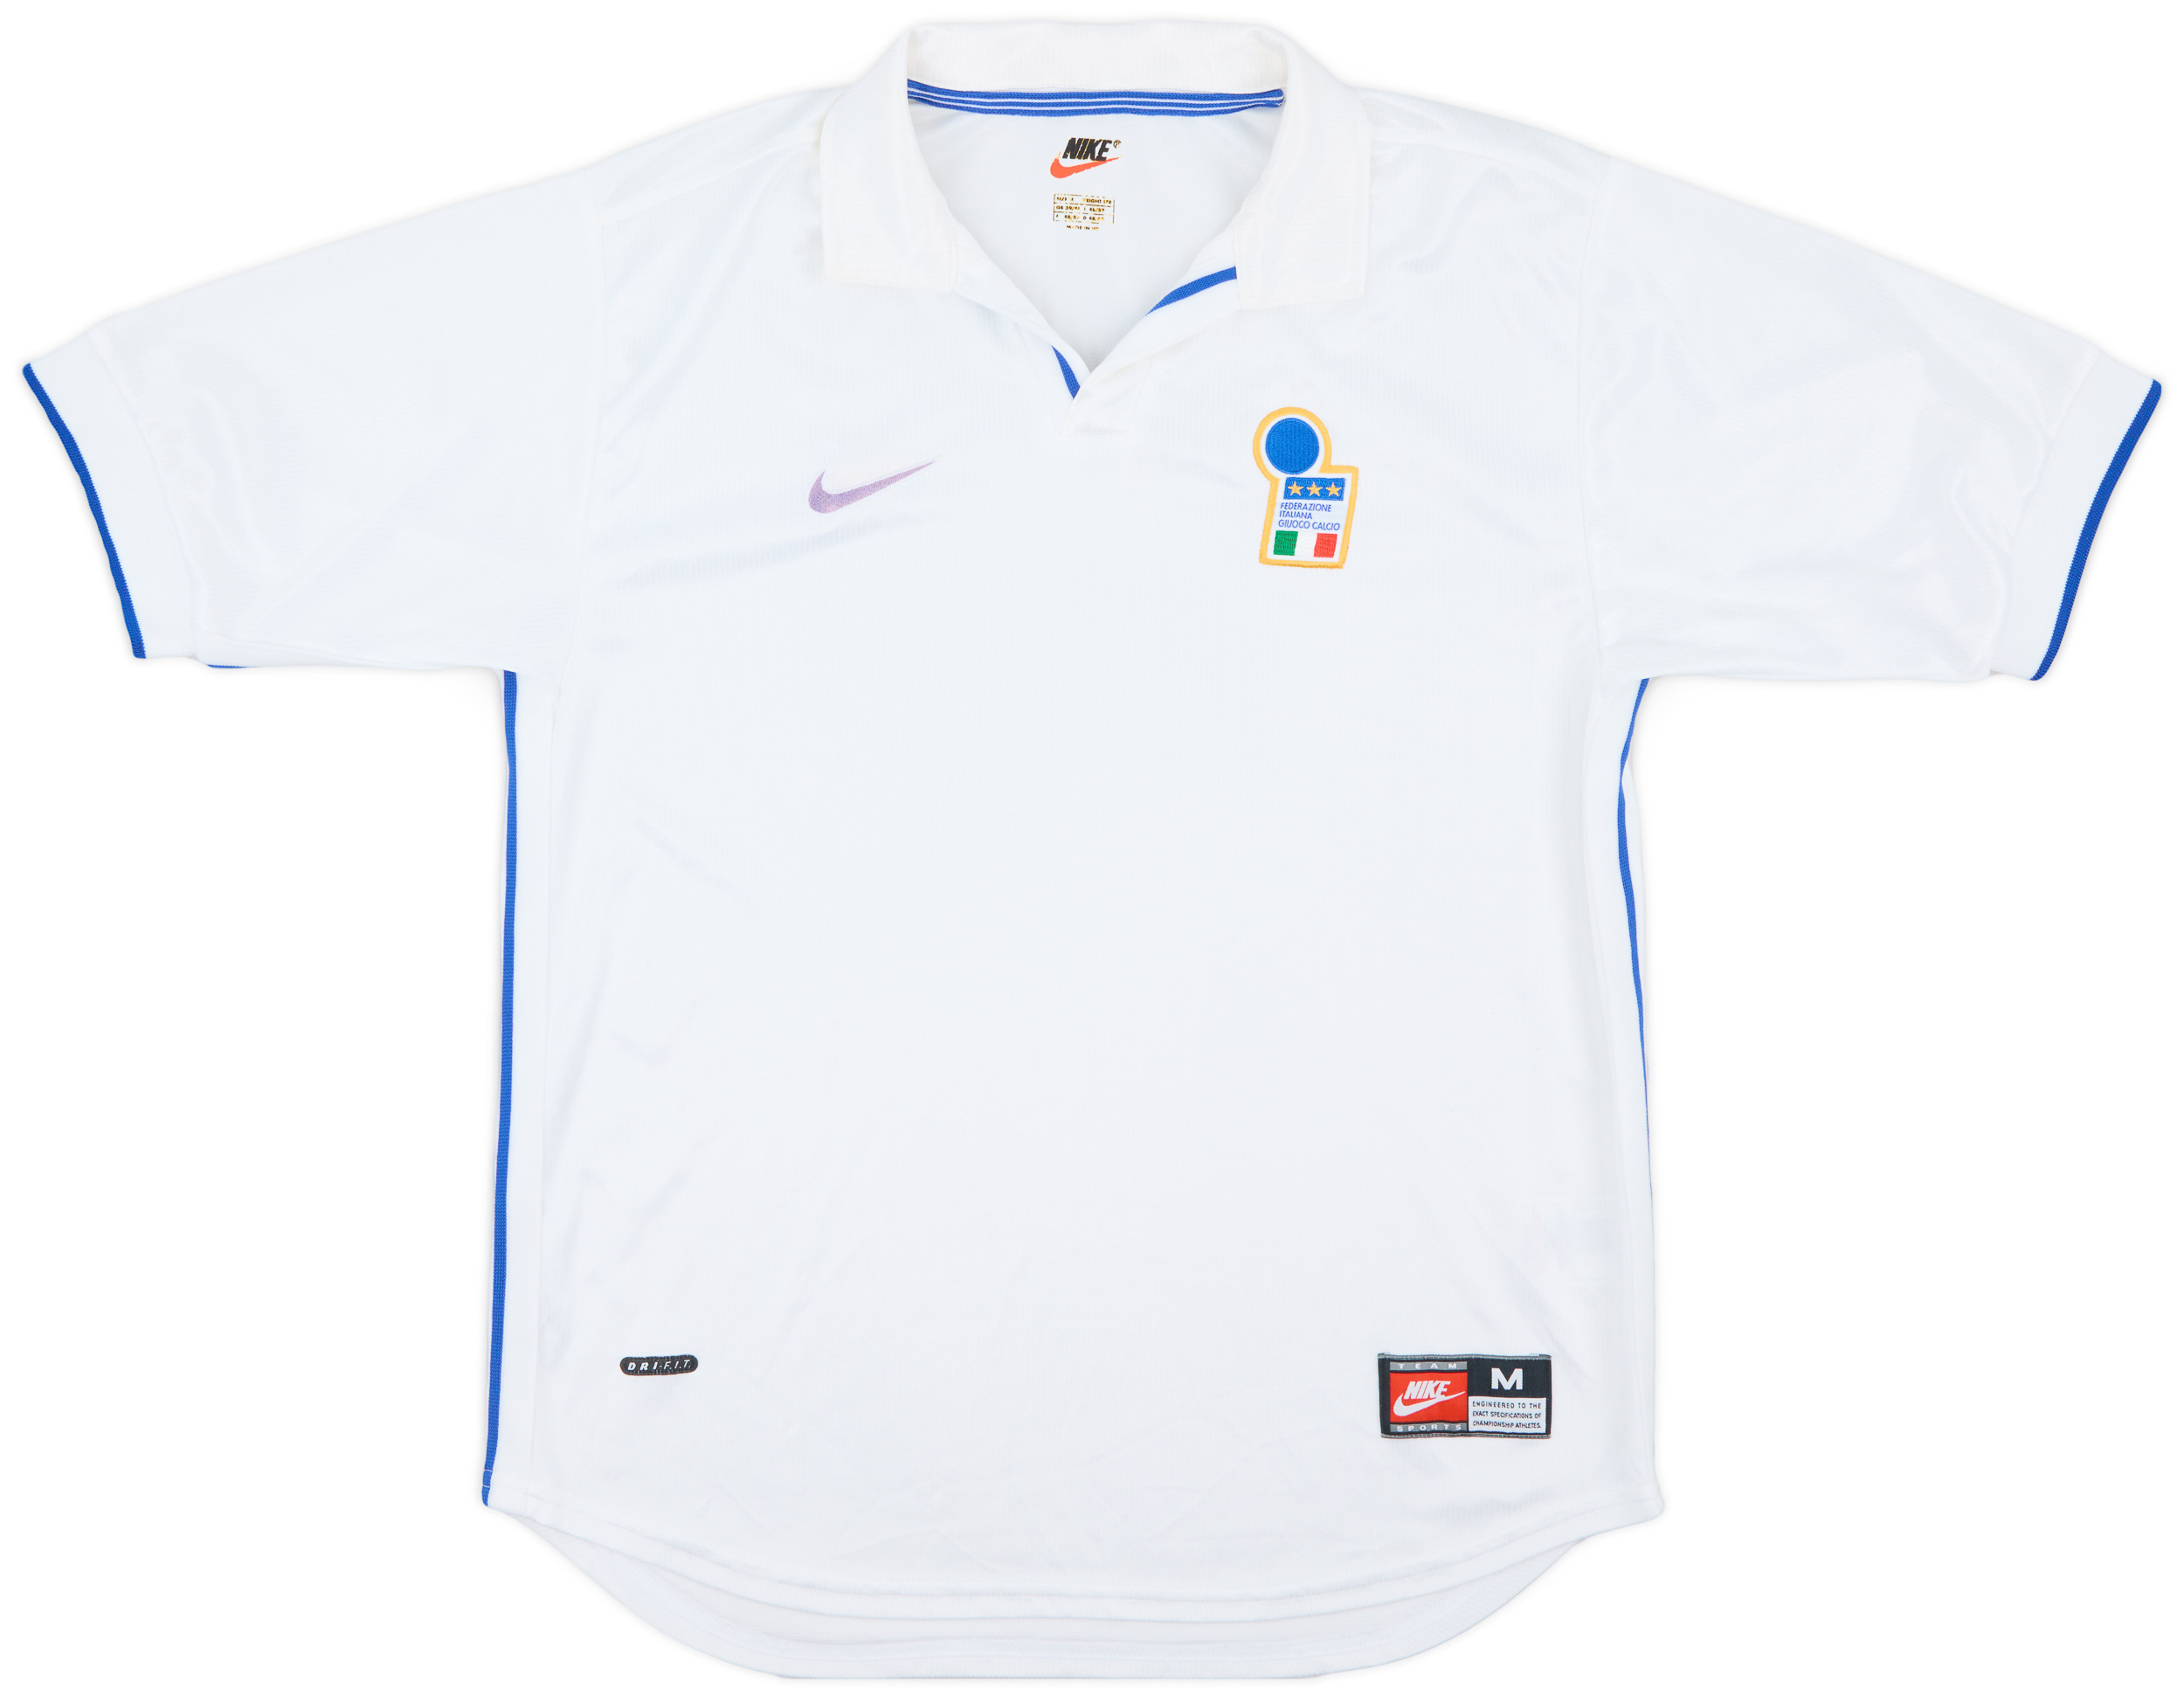 Italy  Fora camisa (Original)